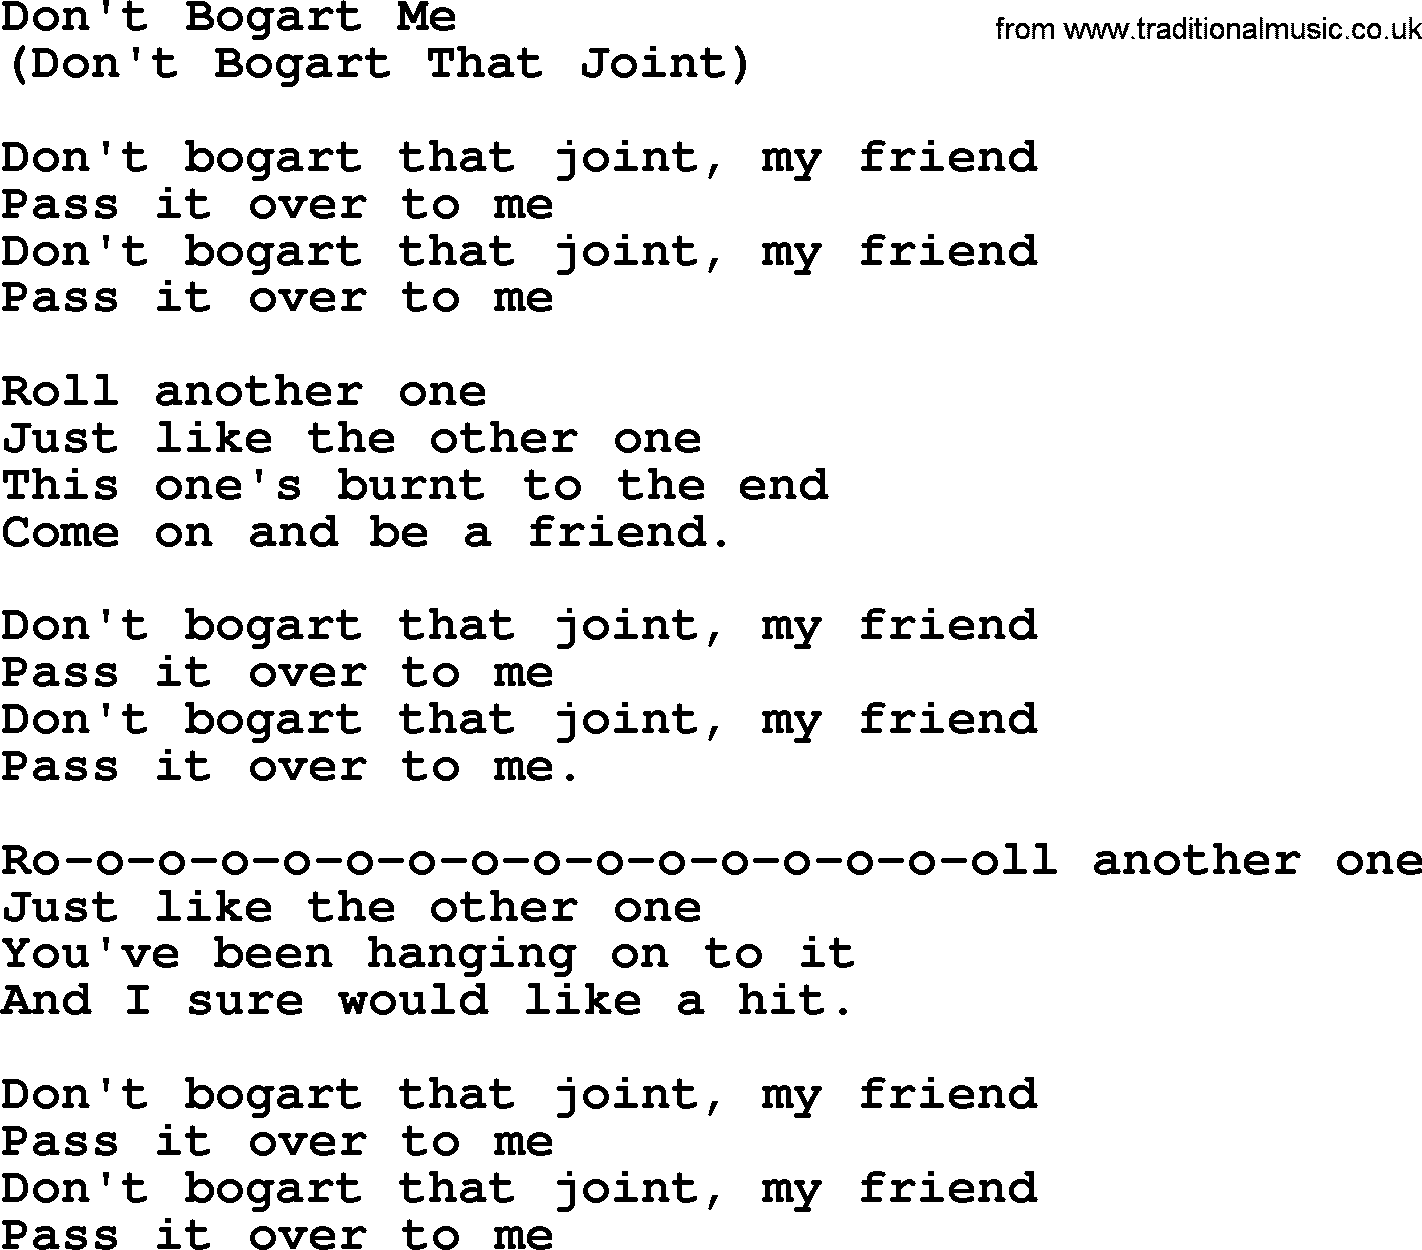 The Byrds song Don't Bogart Me, lyrics